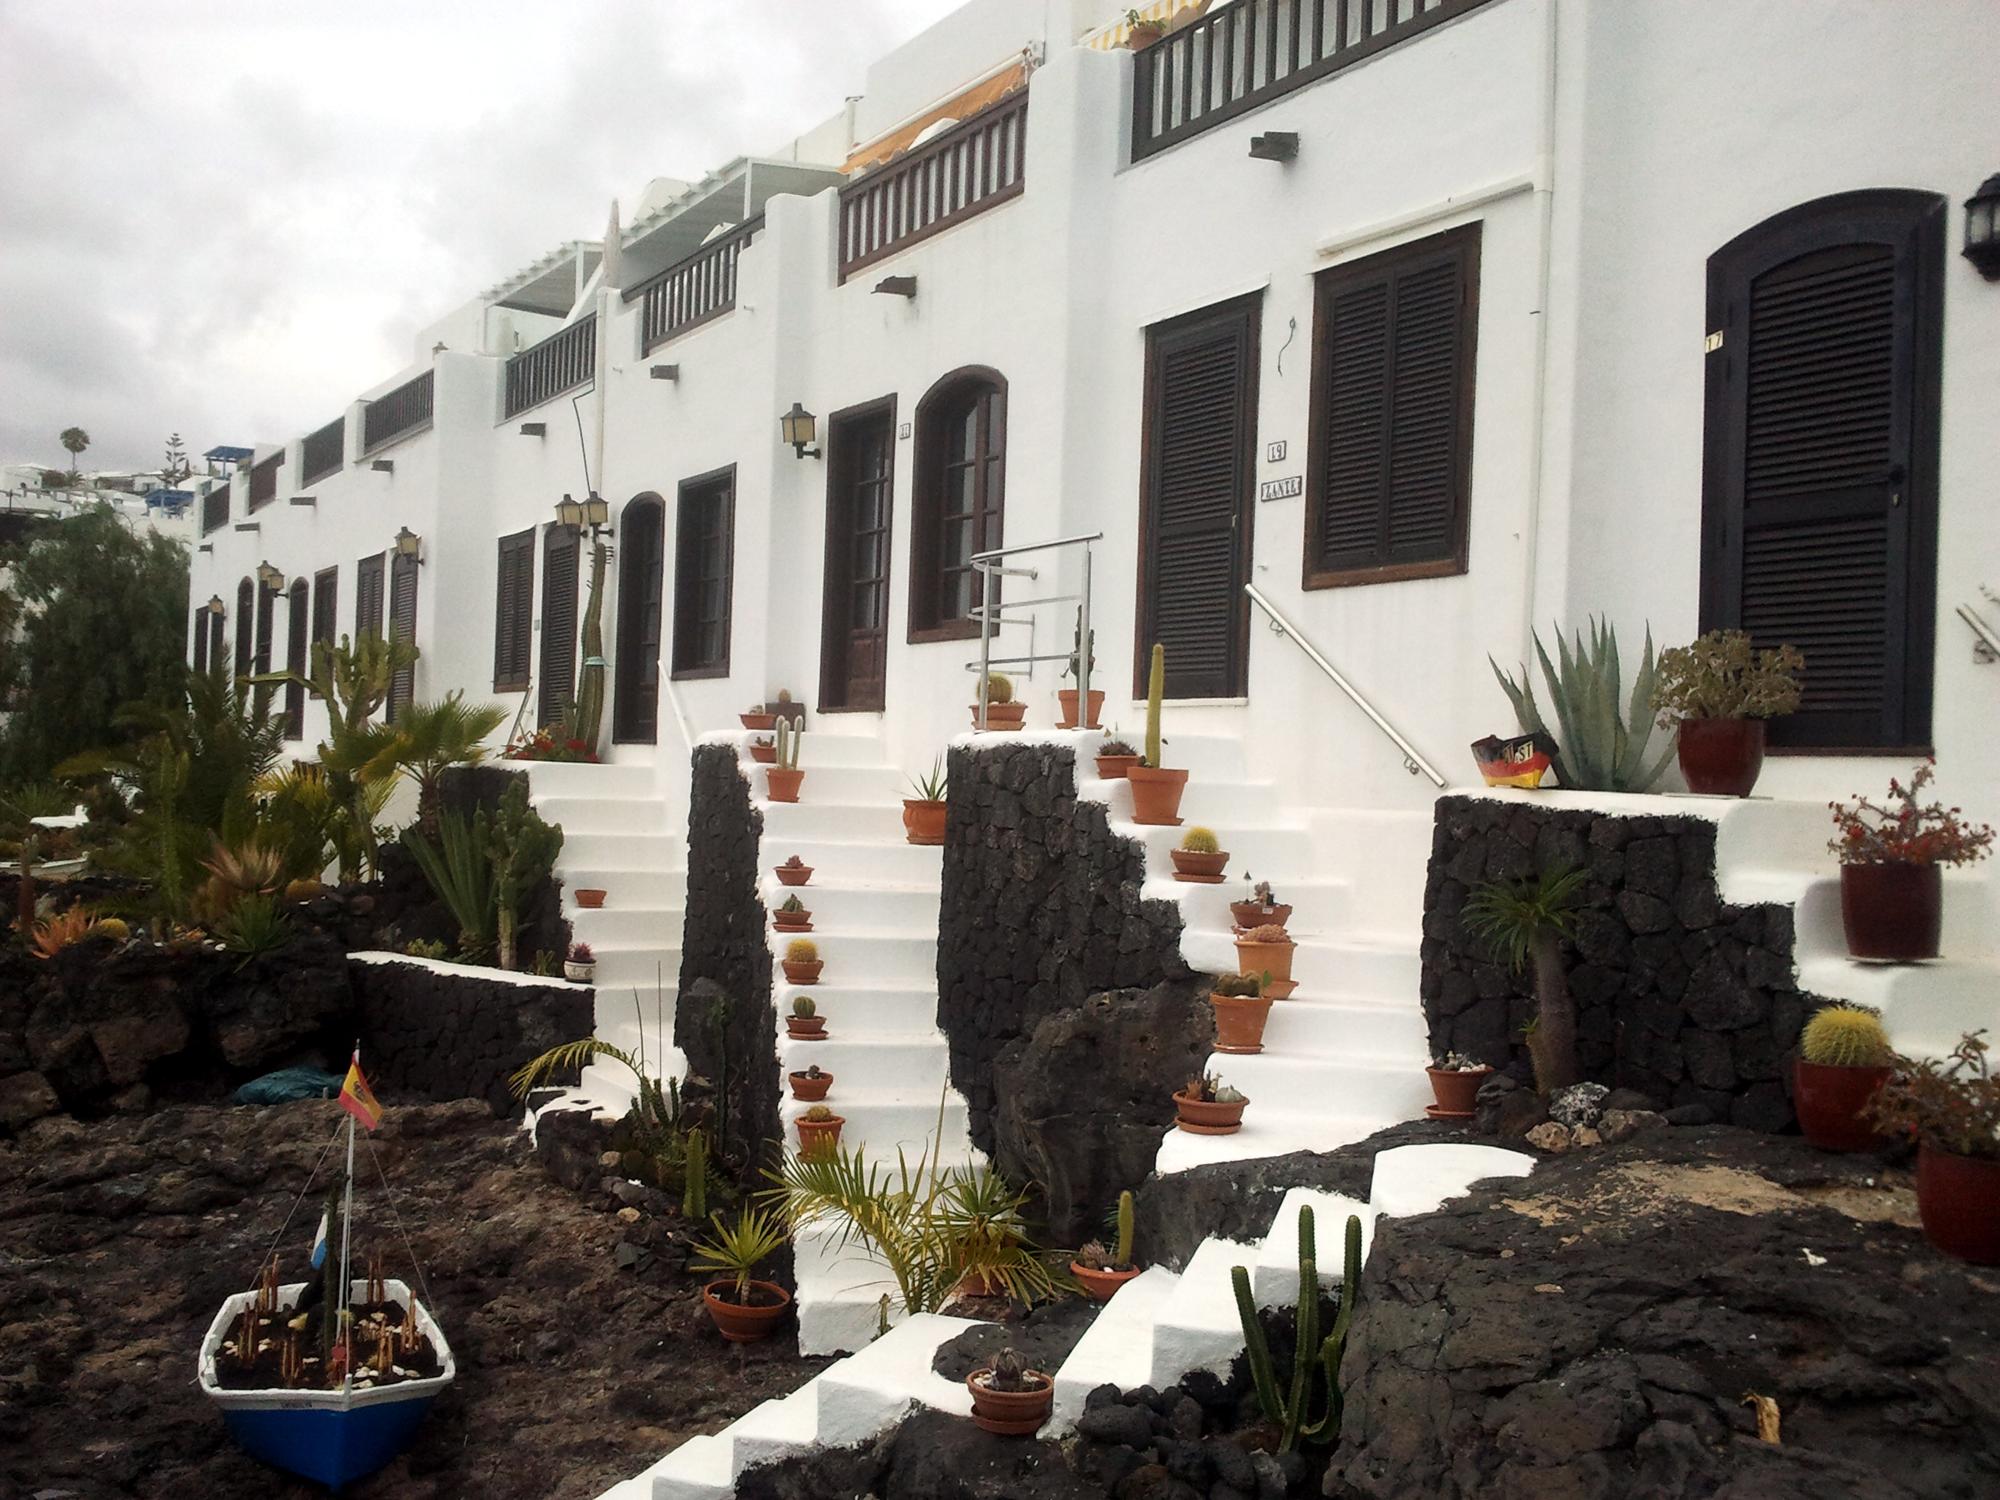  Canary Islands - Row Houses